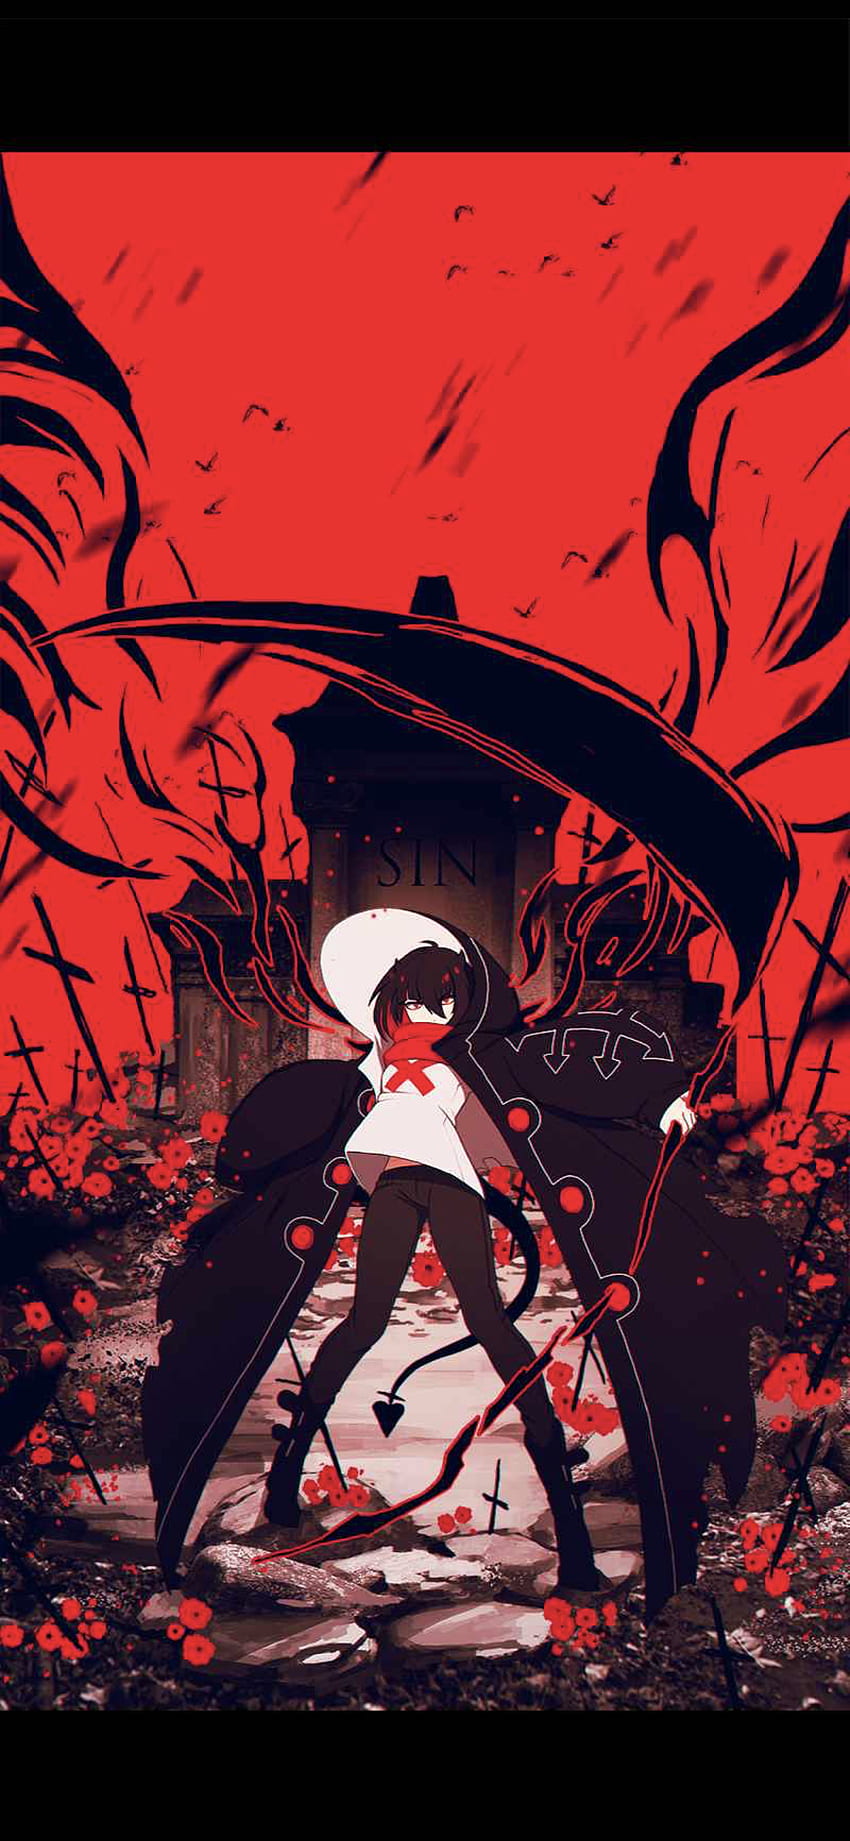 Grim Reaper - Other & Anime Background Wallpapers on Desktop Nexus (Image  777081)